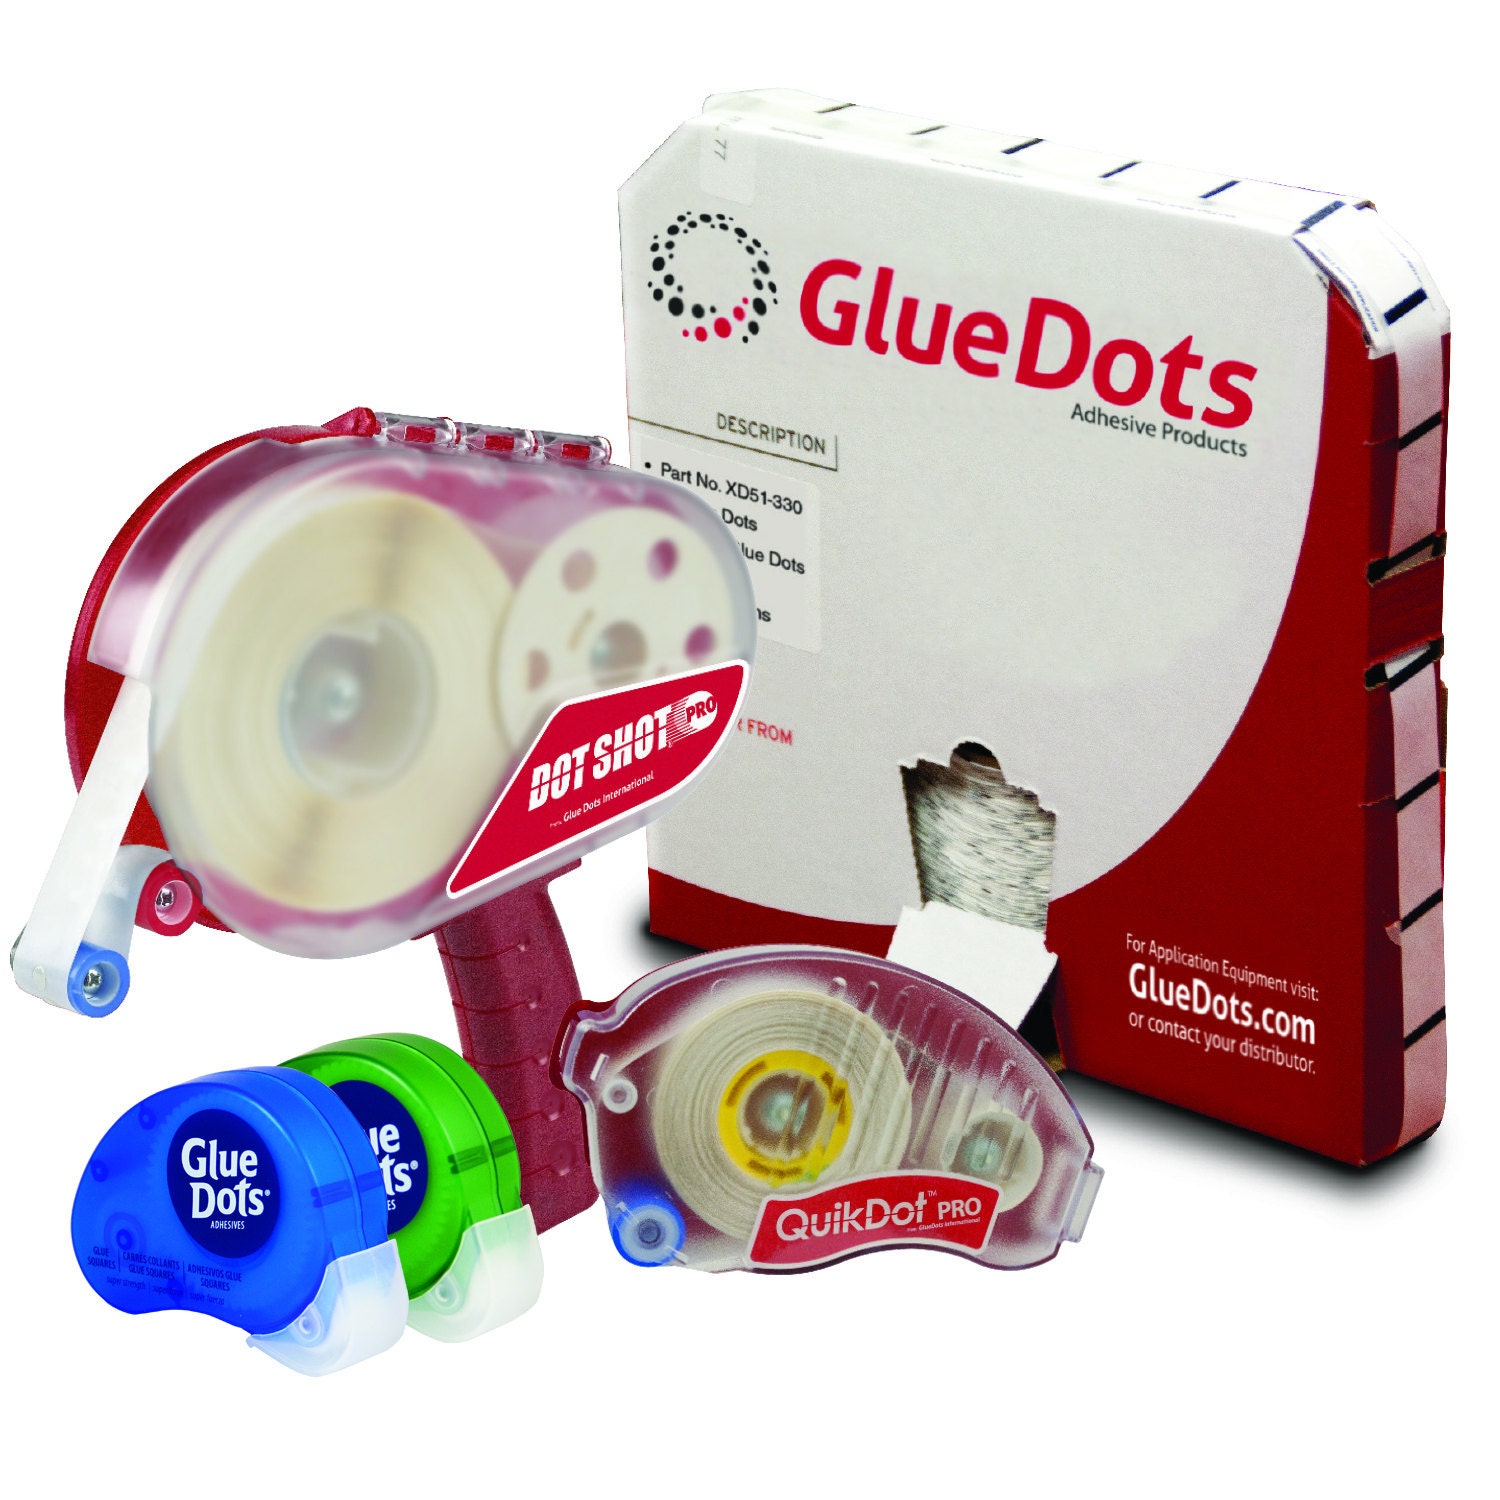 Buy Glue Dots Dot Shot Pro Refill - 1/2 Low-Profile High Tack